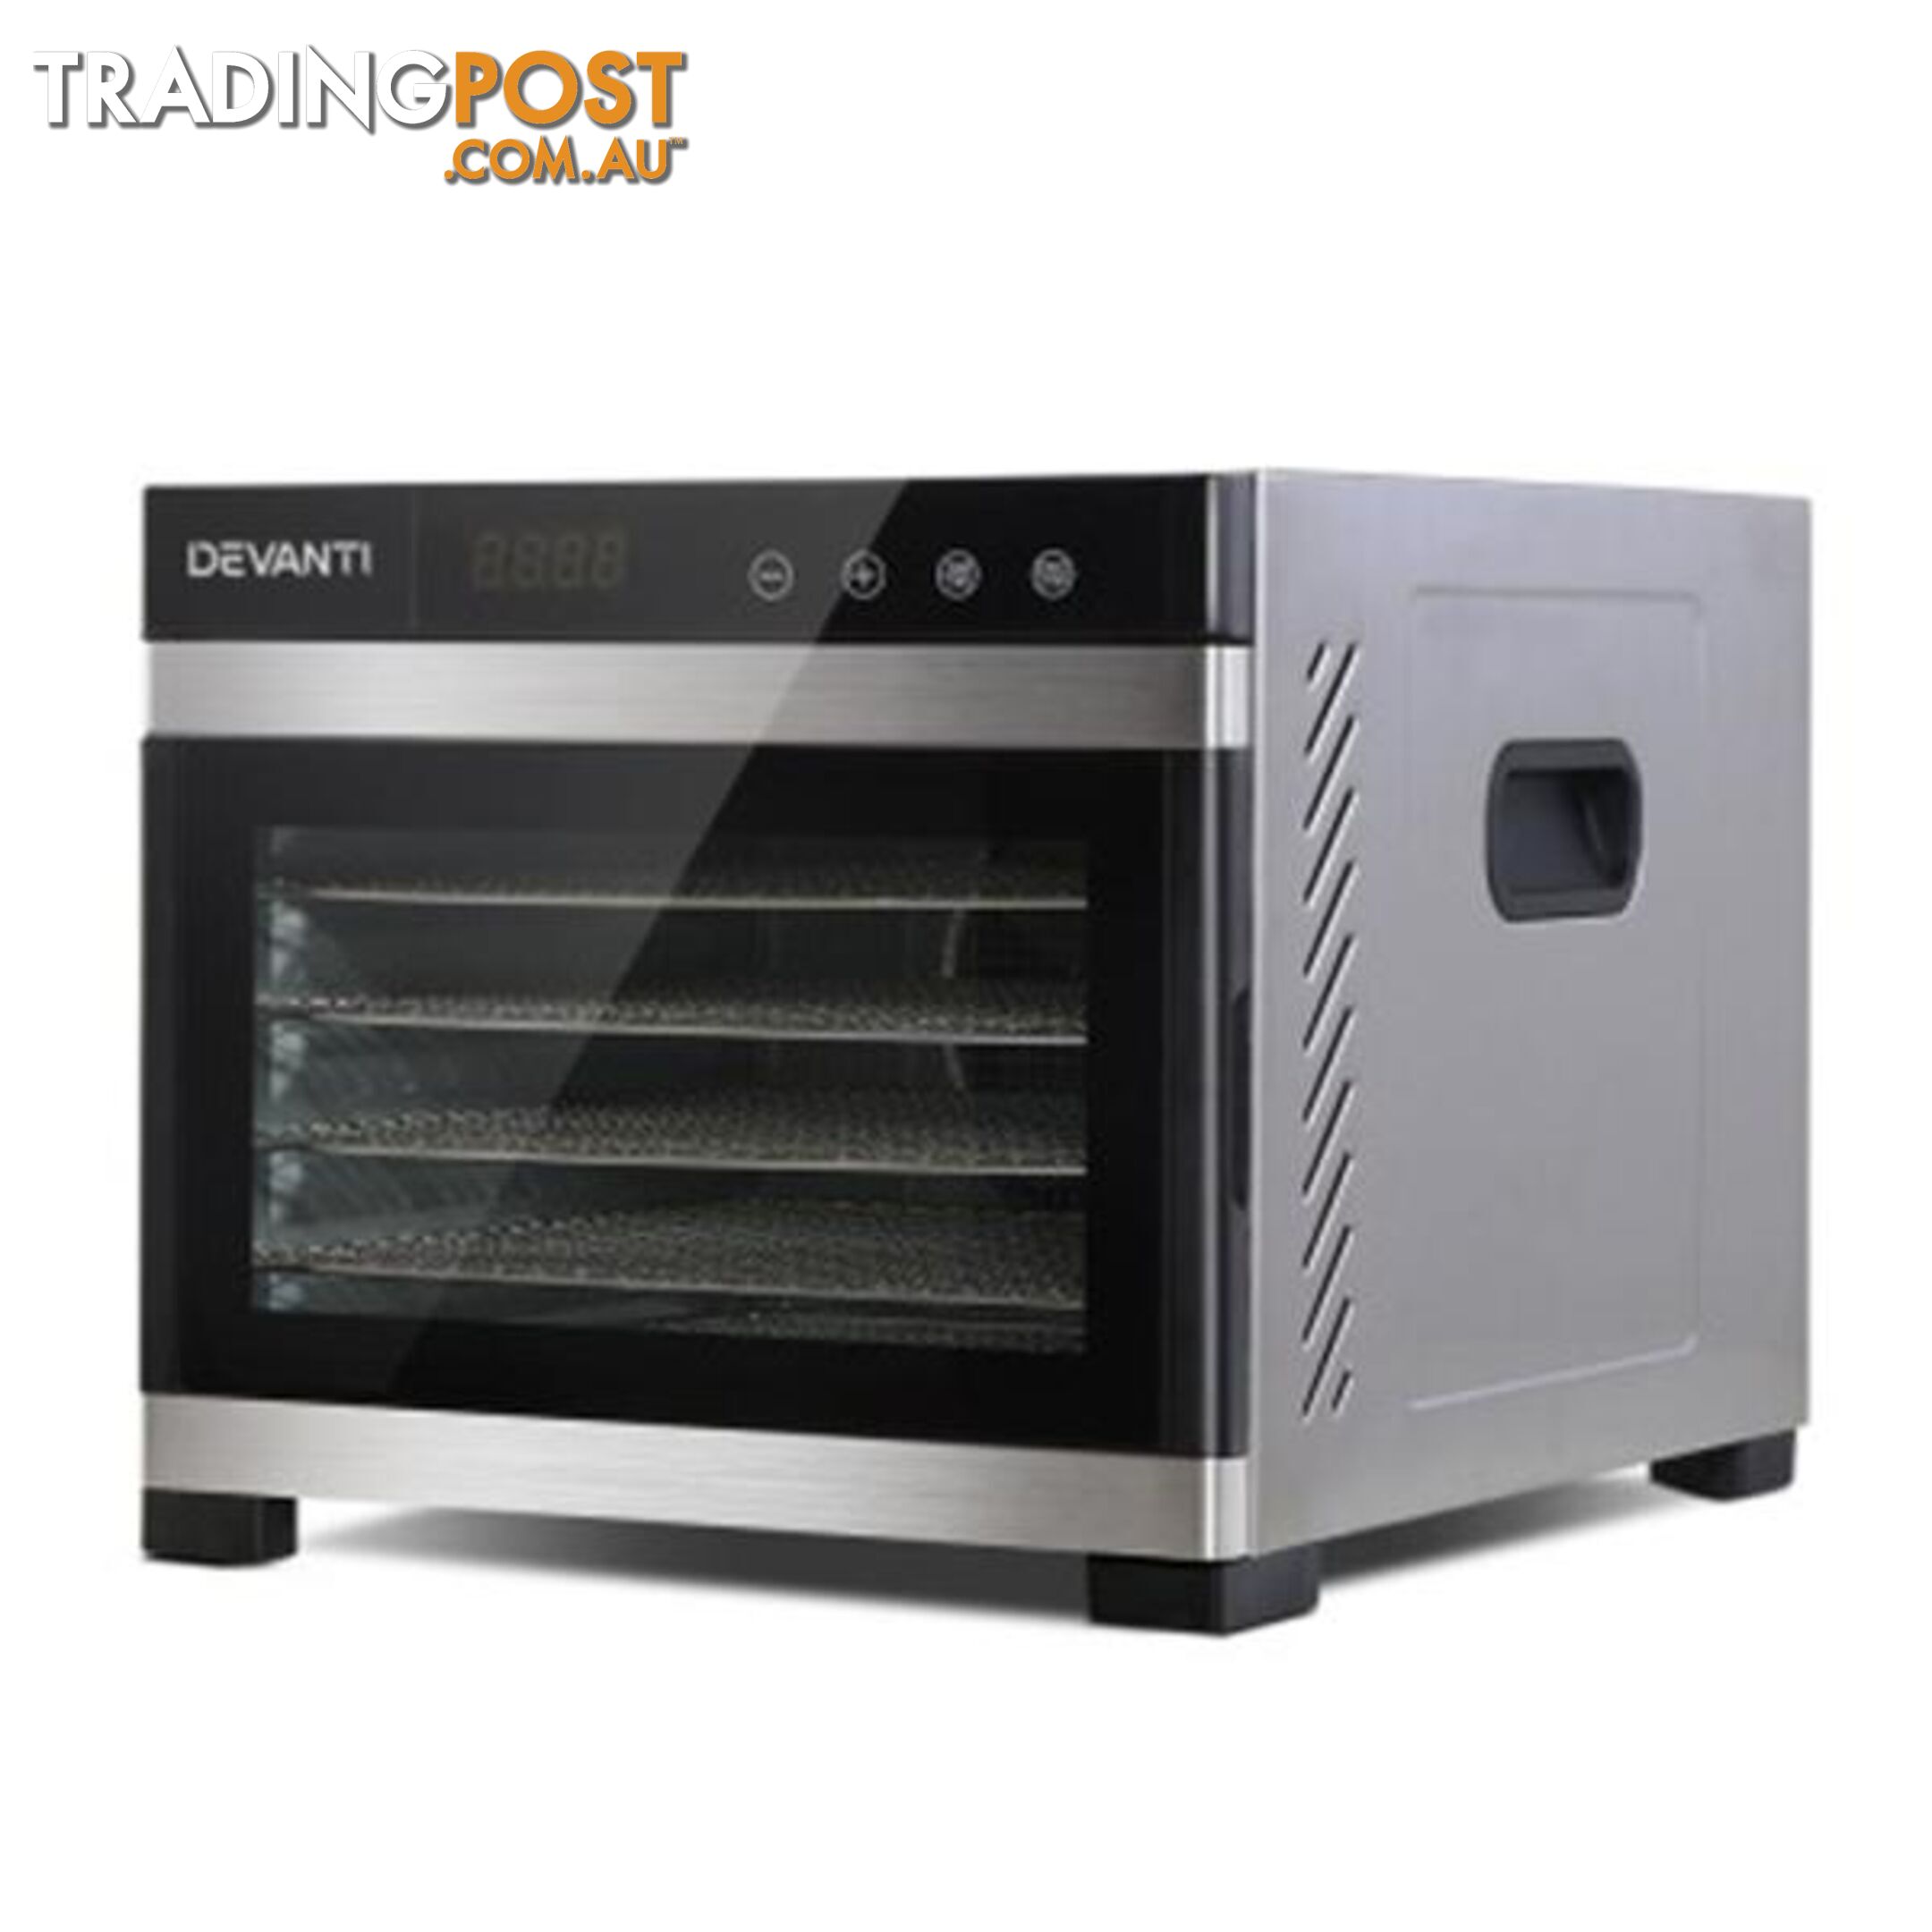 6 Trays Commercial Food Dehydrator Stainless Steel Fruit Dryer - Devanti - 9350062209271